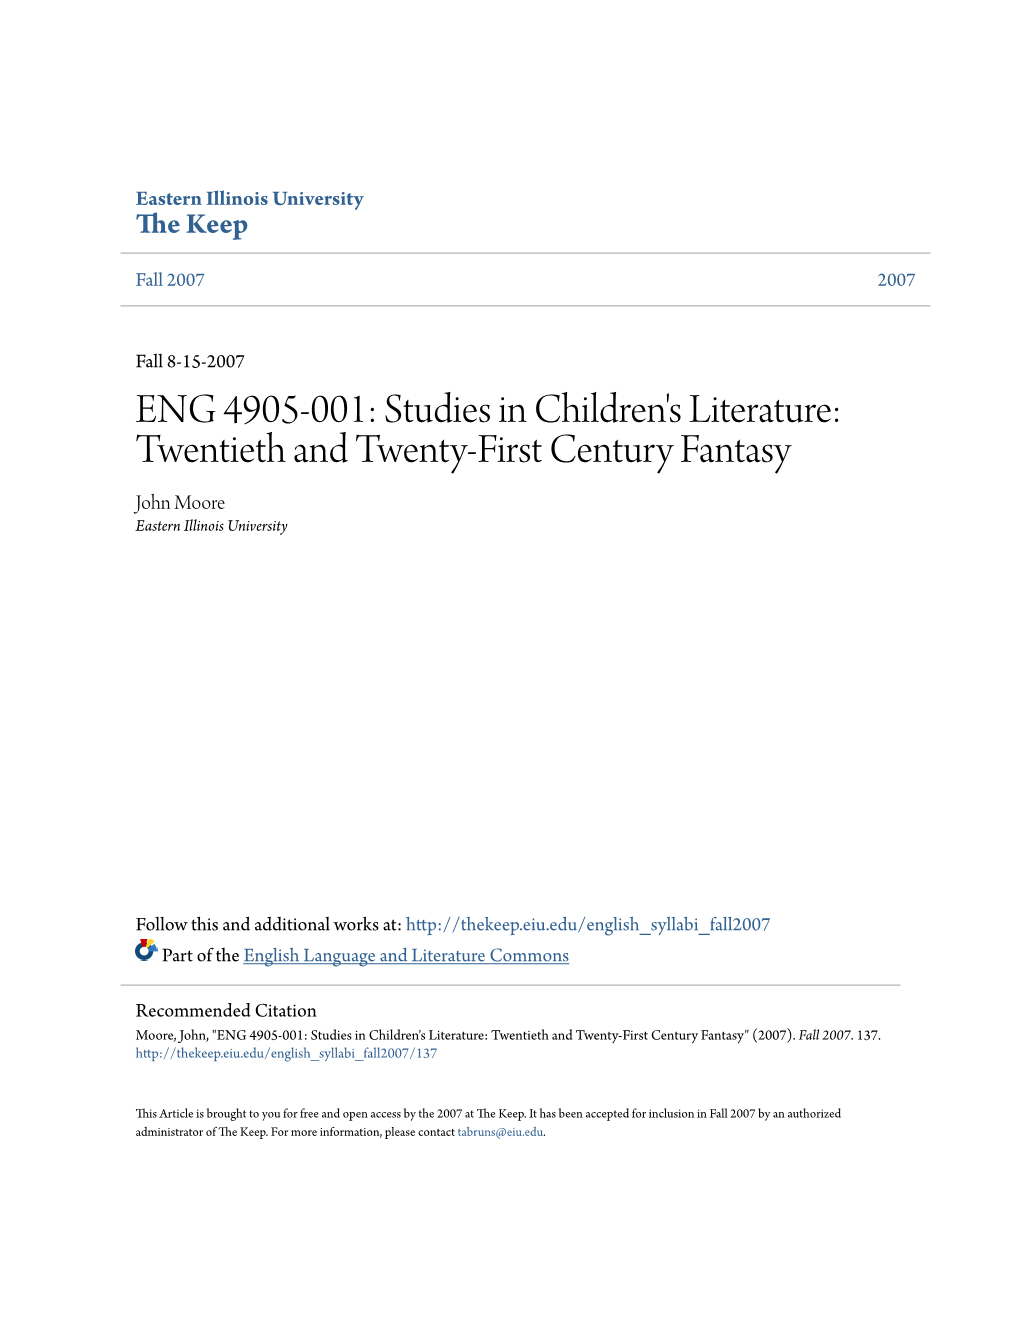 ENG 4905-001: Studies in Children's Literature: Twentieth and Twenty-First Century Fantasy John Moore Eastern Illinois University